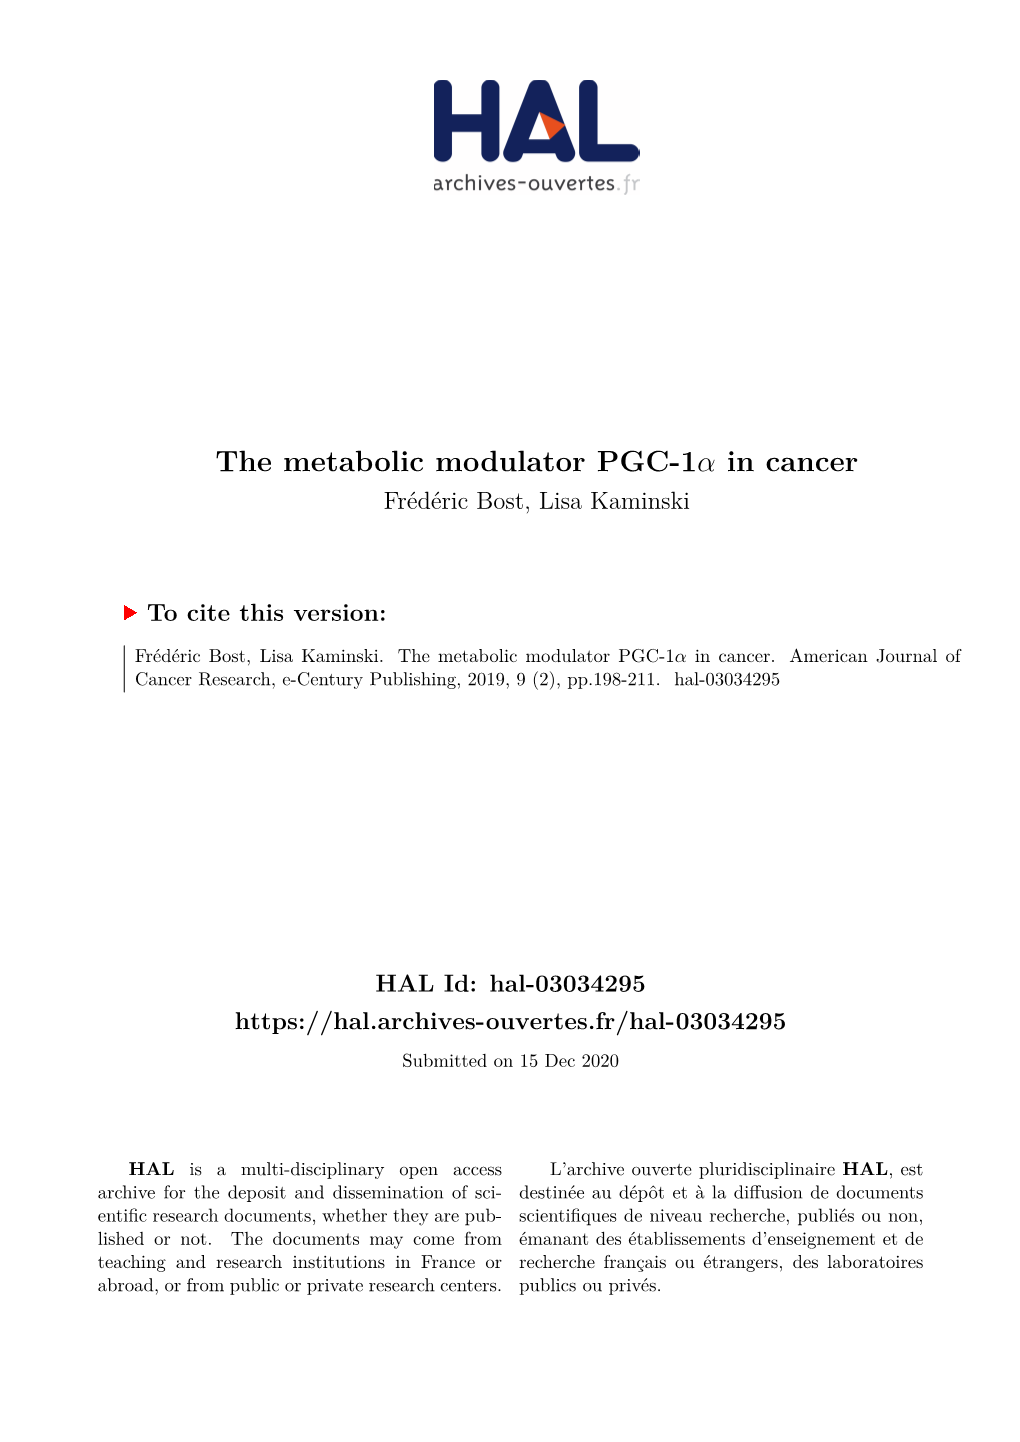 The Metabolic Modulator PGC-1Α in Cancer Frédéric Bost, Lisa Kaminski